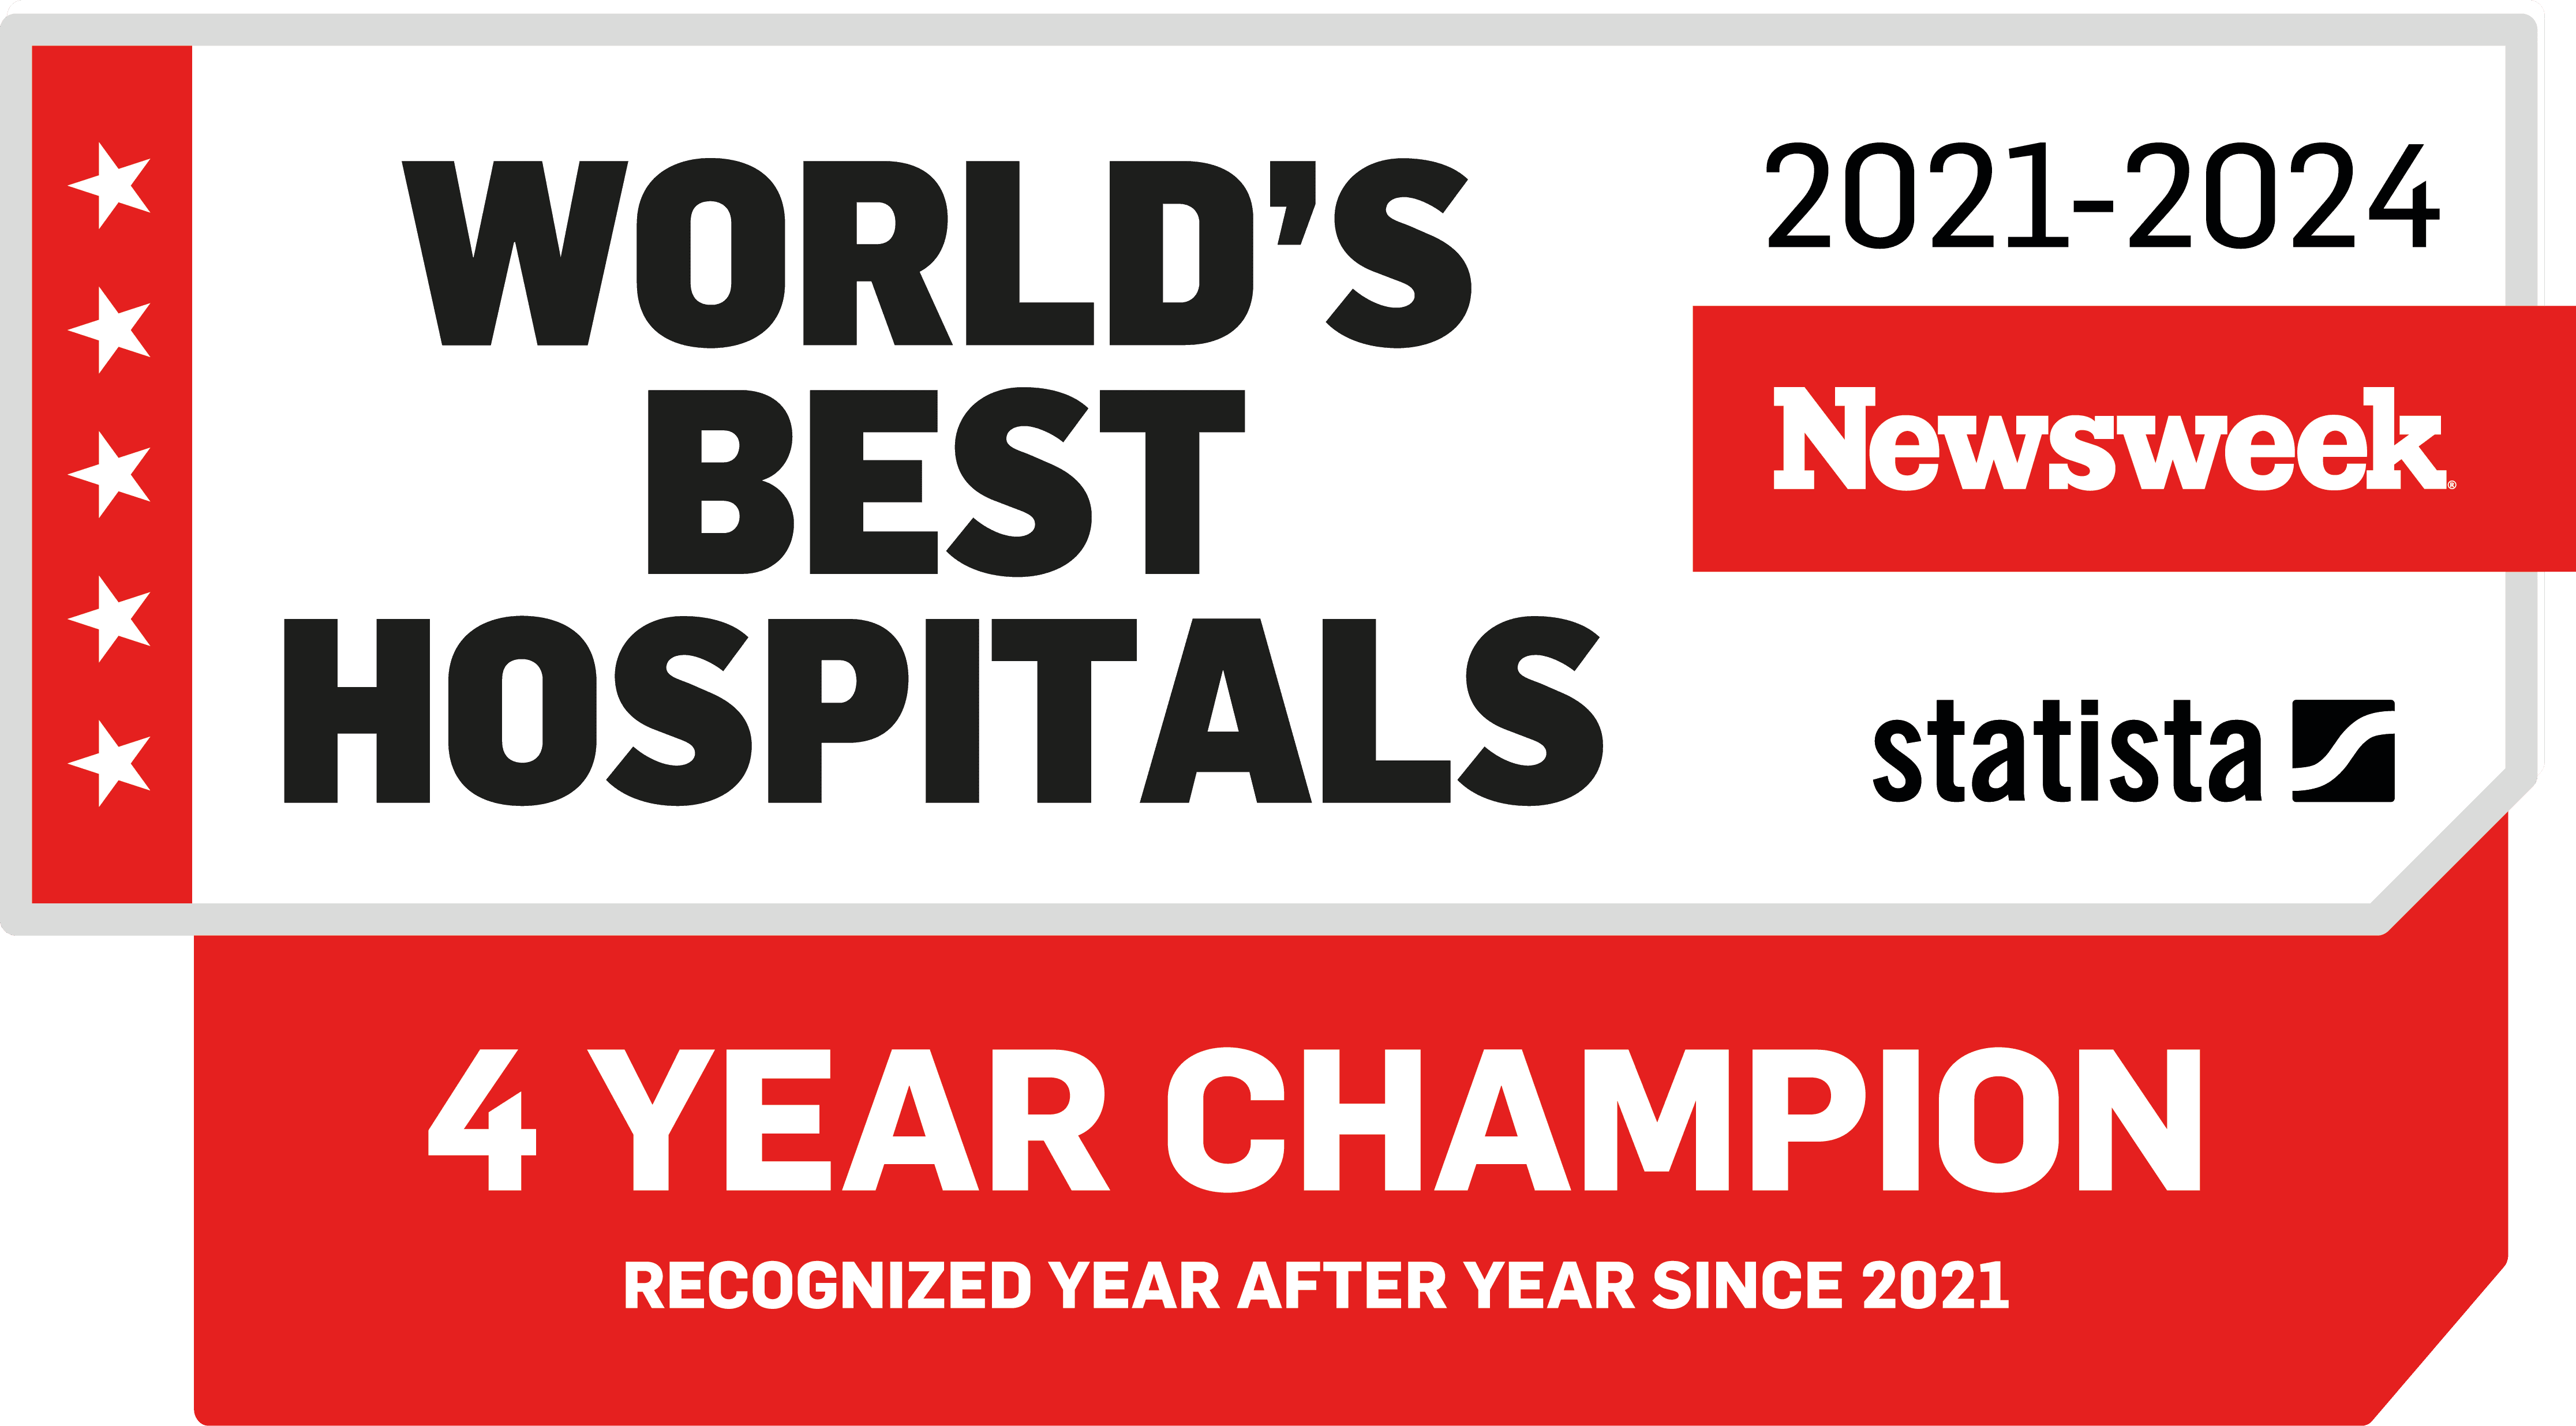 Newsweek World's Best Hospitals, 2021-2024